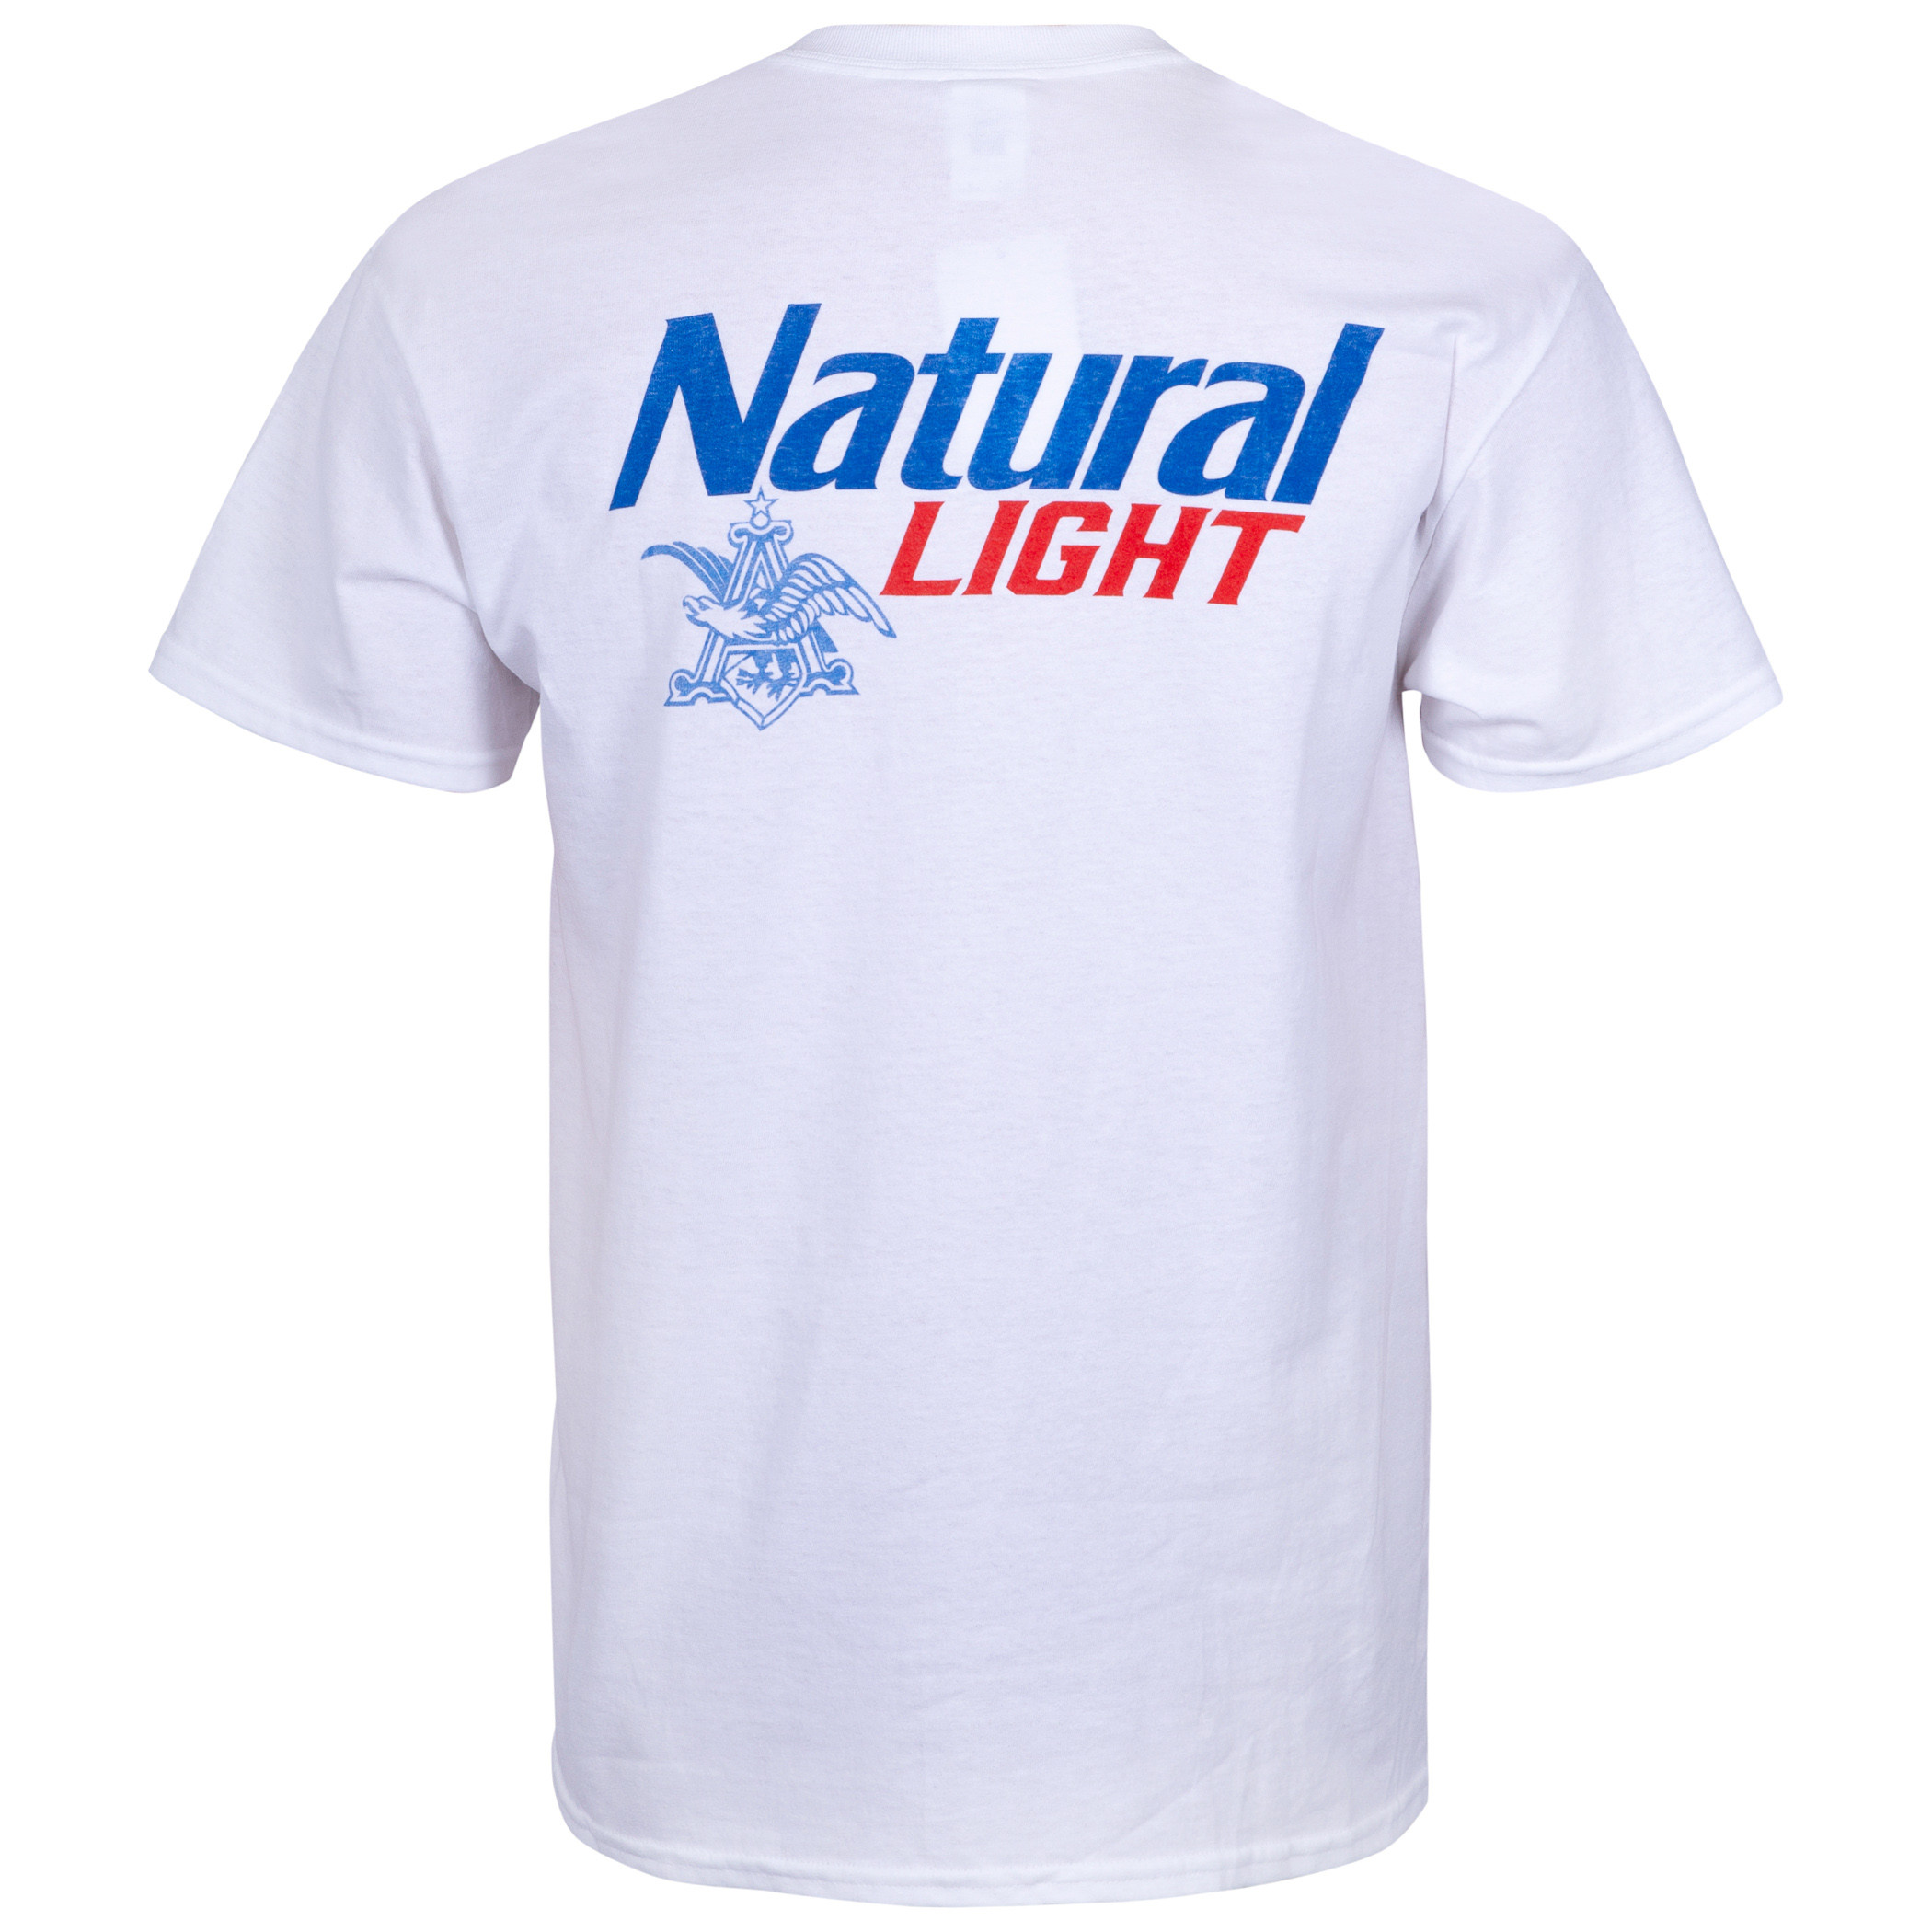 Natural Light White Pocket Tee Shirt